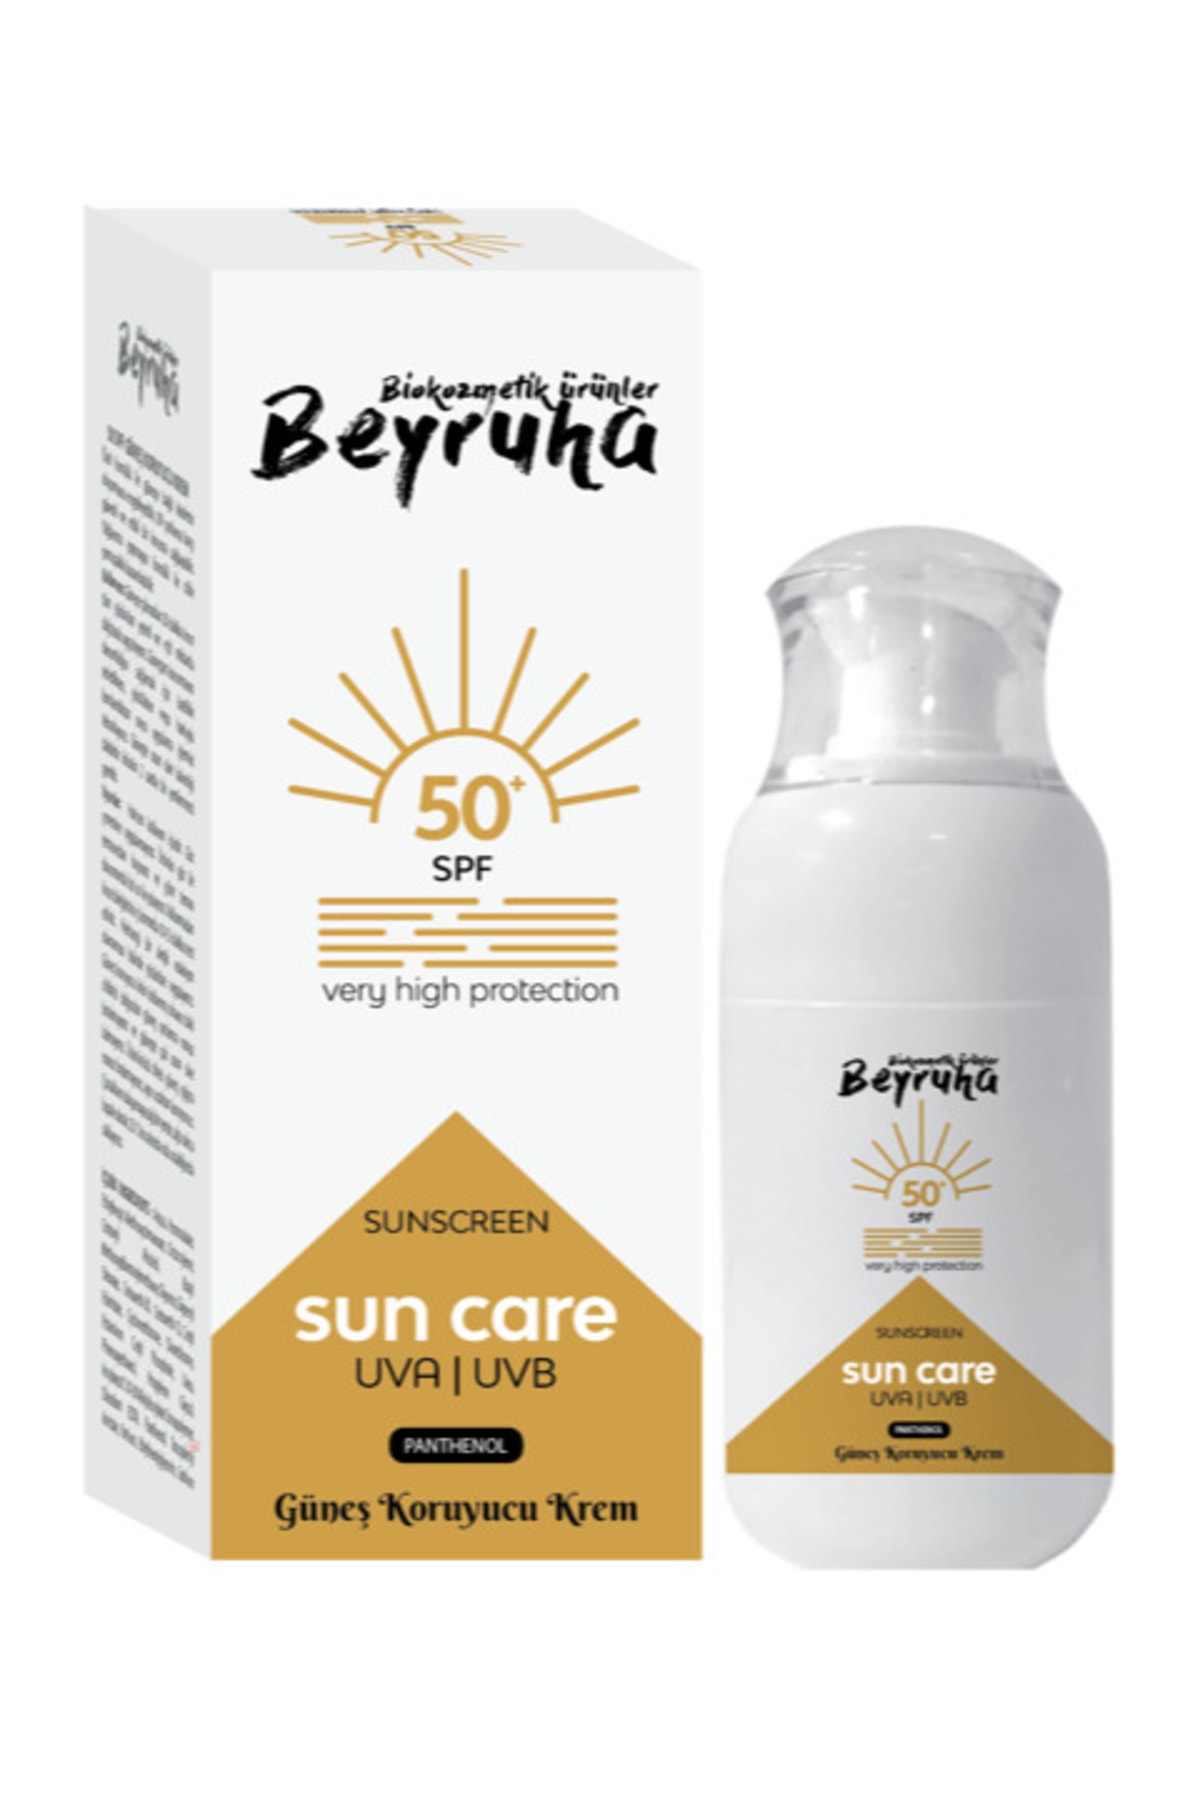 Beyruha Organic Kozmetik Yüksek Koruma Güneş Kremi 50+ Spf – High Protection Sunscreen Uva I Uvb